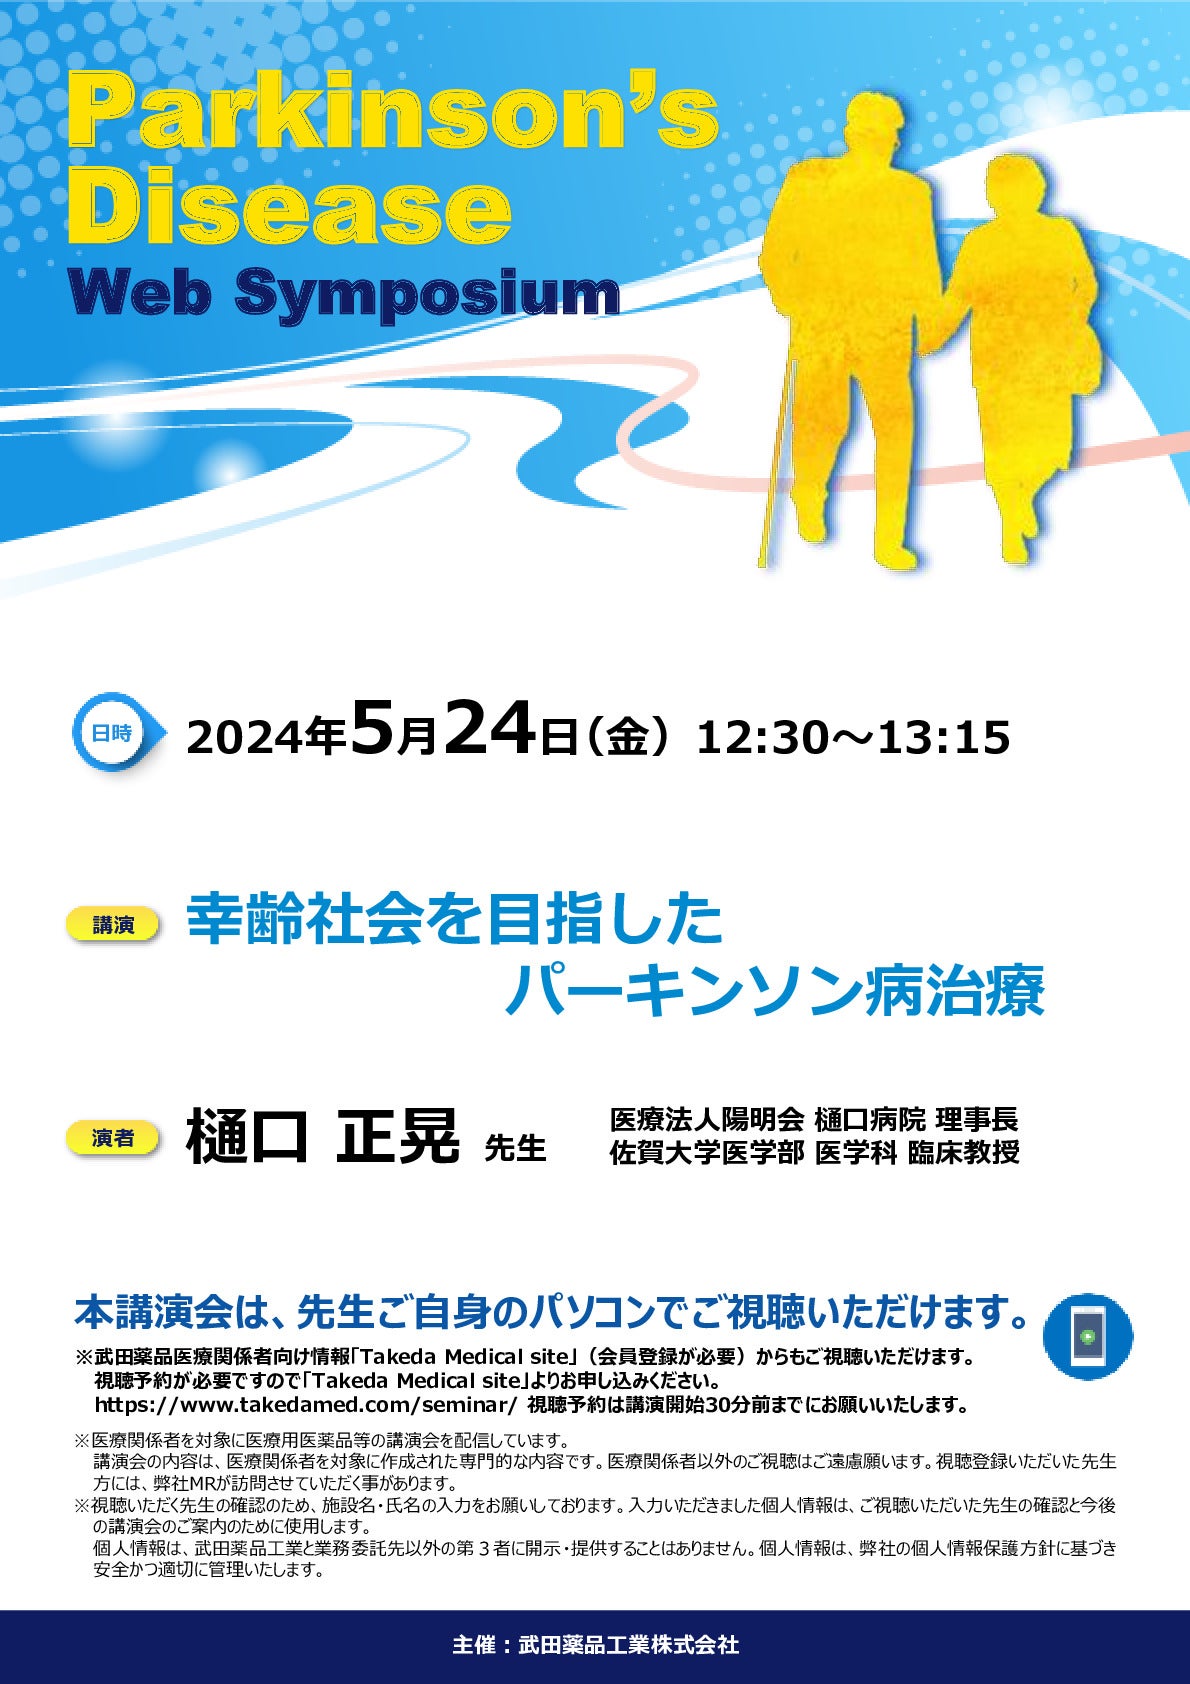 Parkinson's Disease Web Symposium